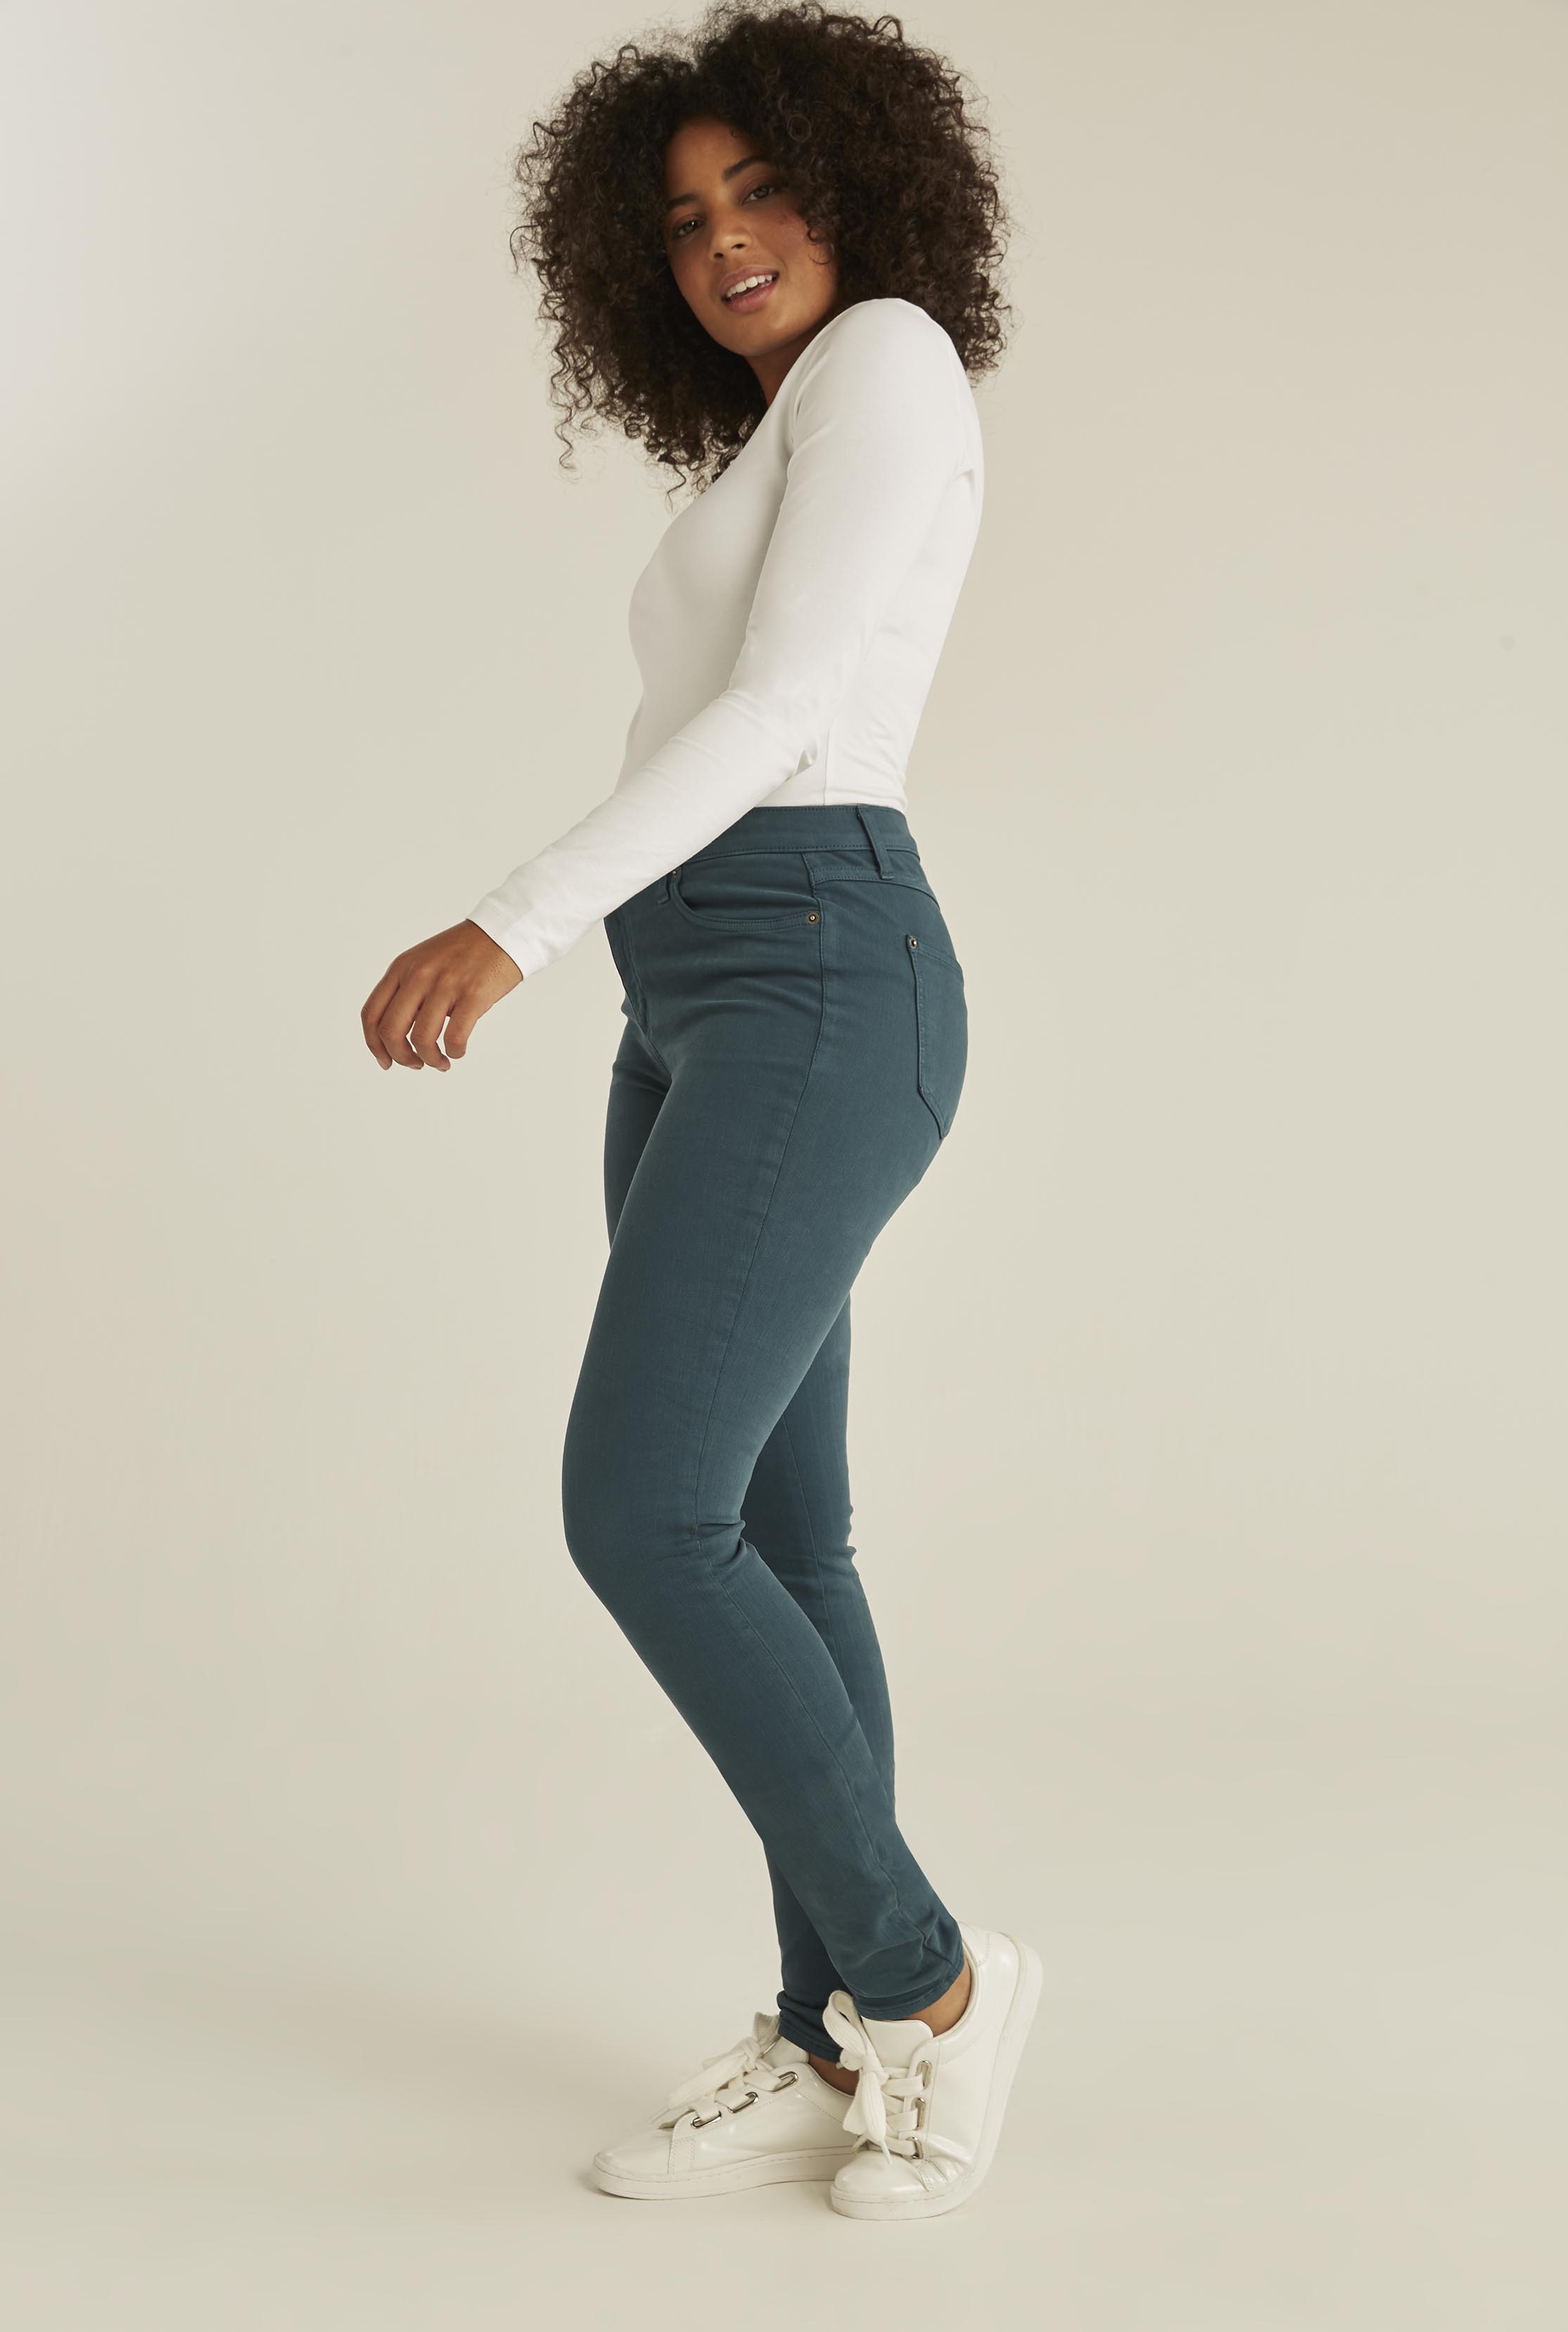 YOGA JEANS Teal Rachel Skinny Jeans | Long Tall Sally